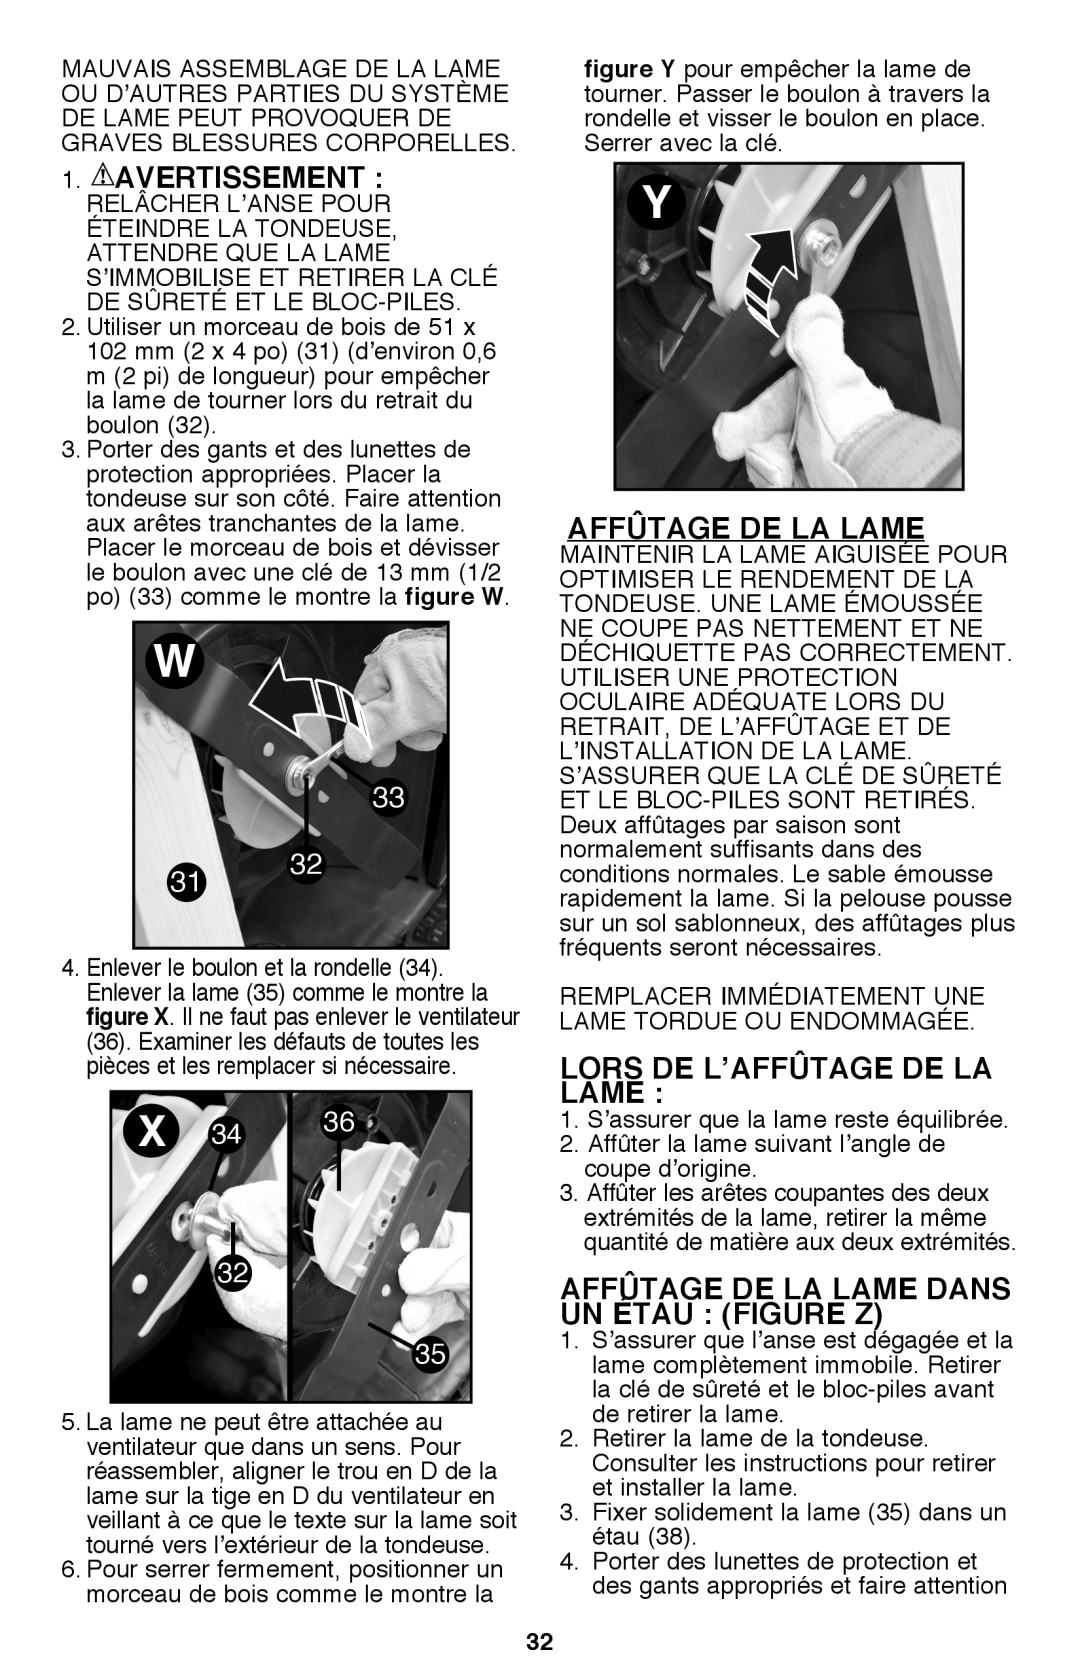 Black & Decker CM2040 Avertissement, Lors De L’Affûtage De La Lame, Affûtage De La Lame Dans Un Étau Figure Z, X 34 